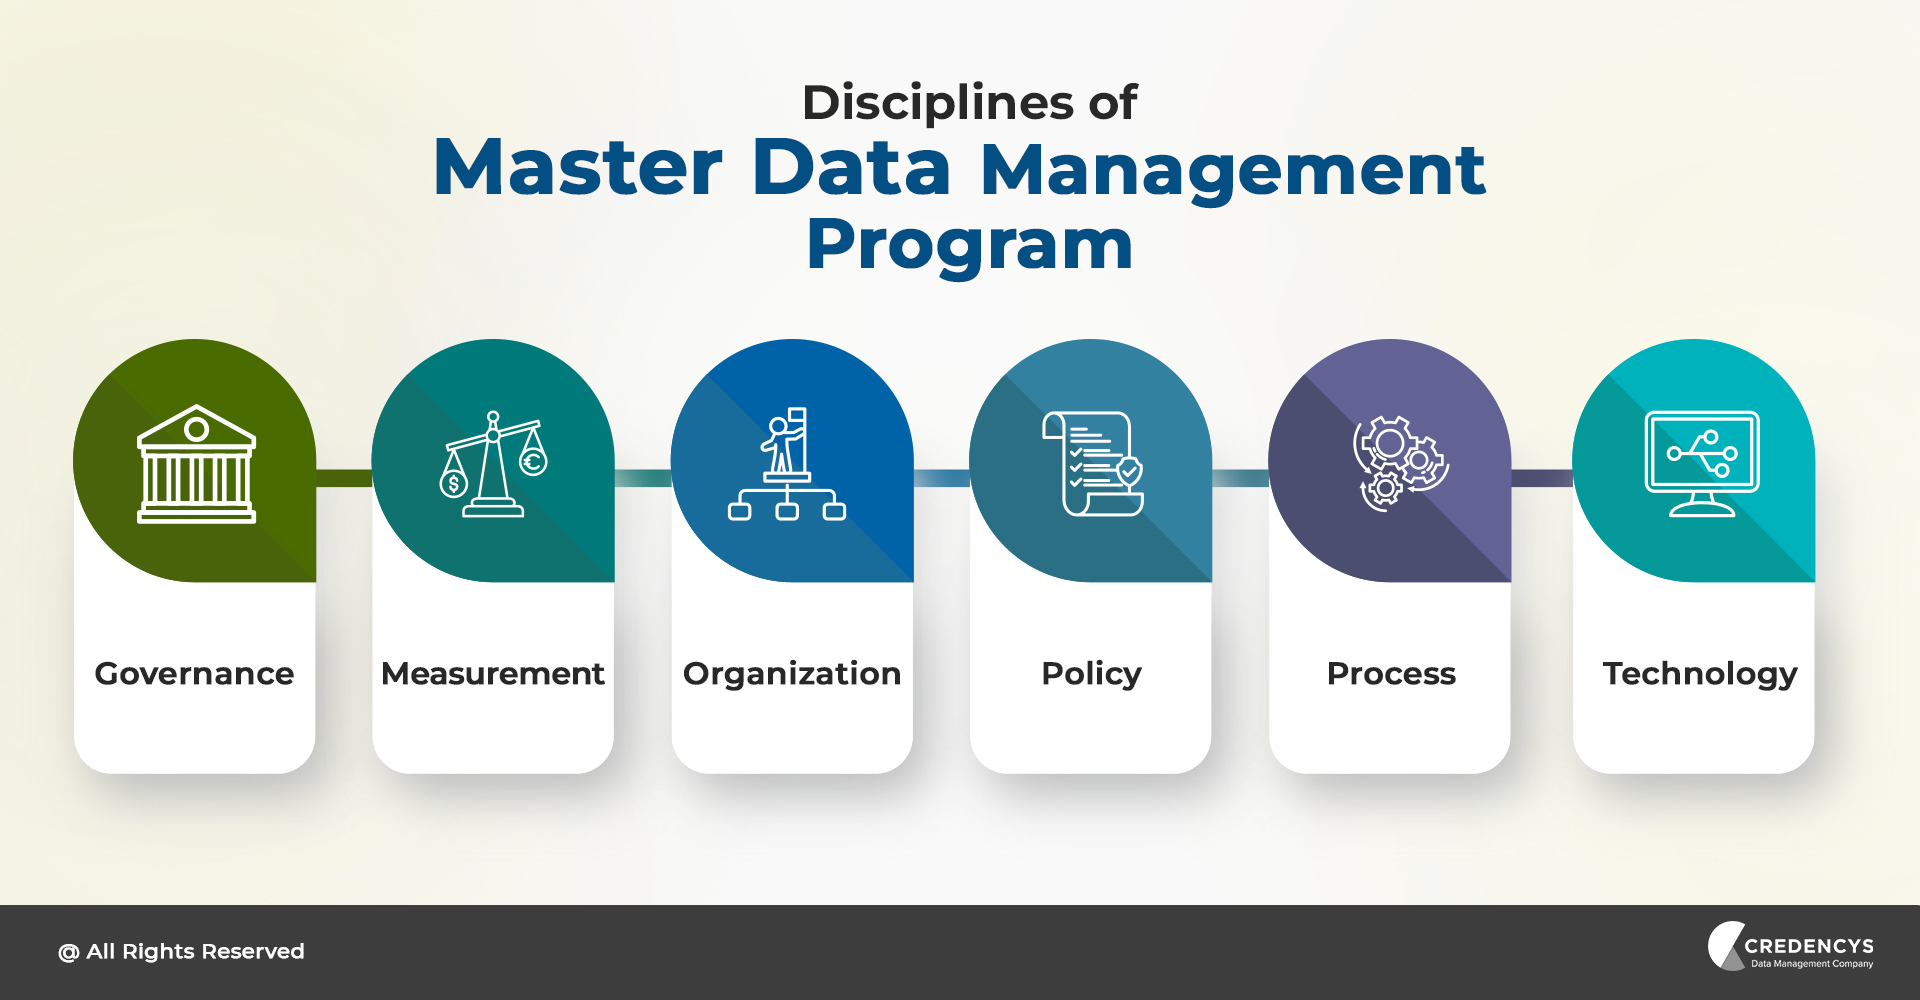 Disciplines of Master Data Management Program